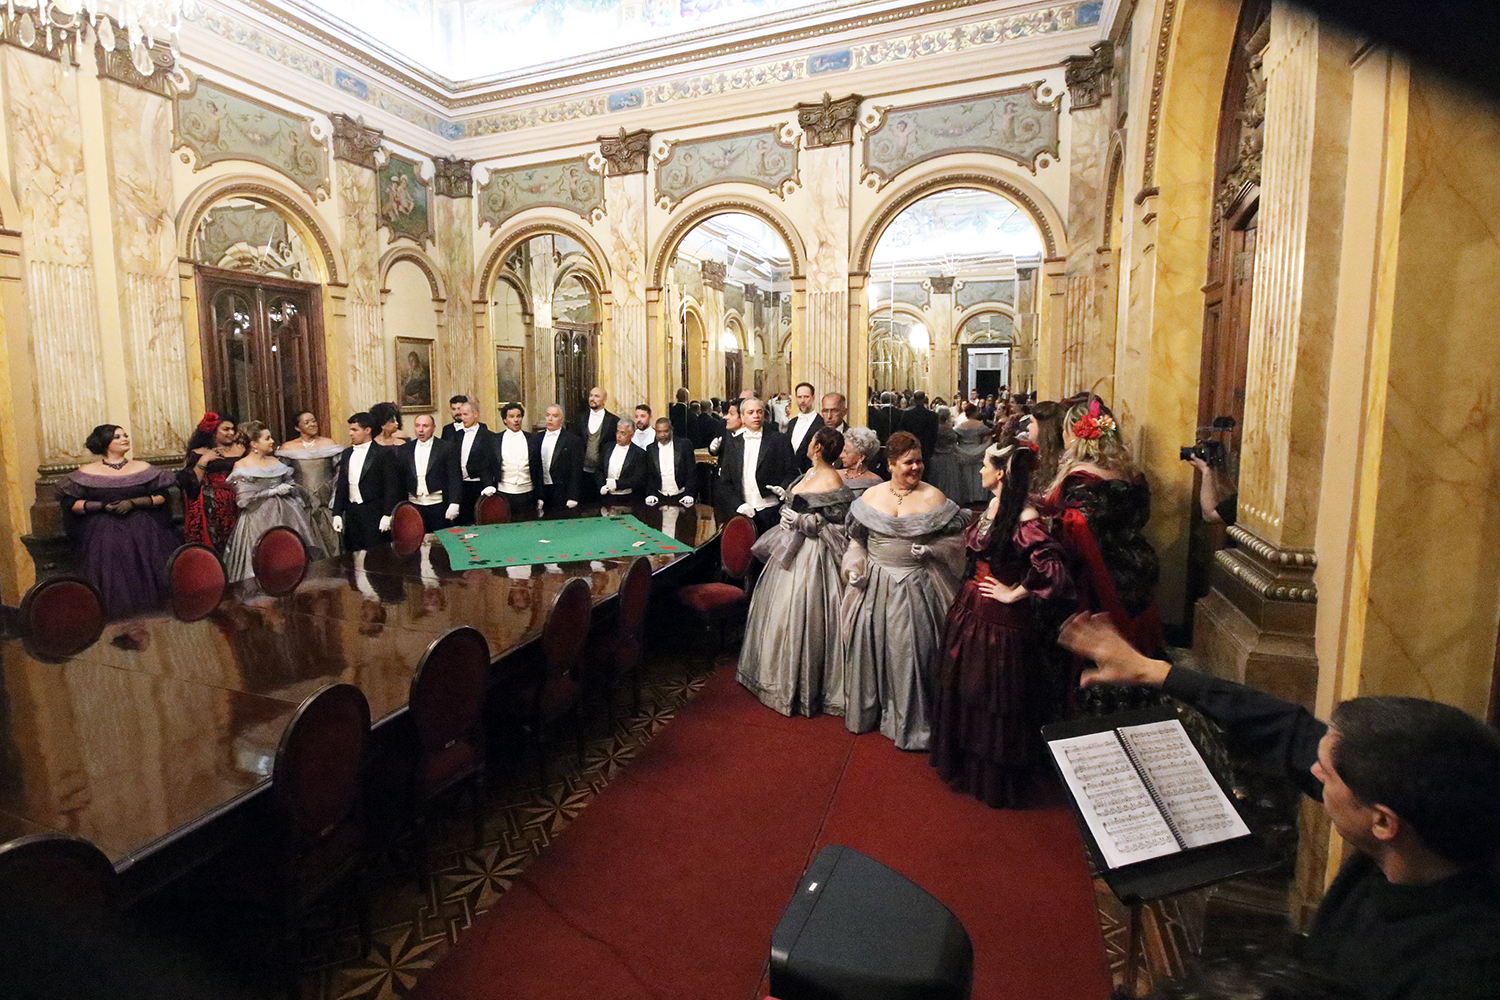 A pedido do público, Coral Lírico de Minas Gerais volta a apresentar o concerto “Noites Líricas” no Palácio da Liberdade